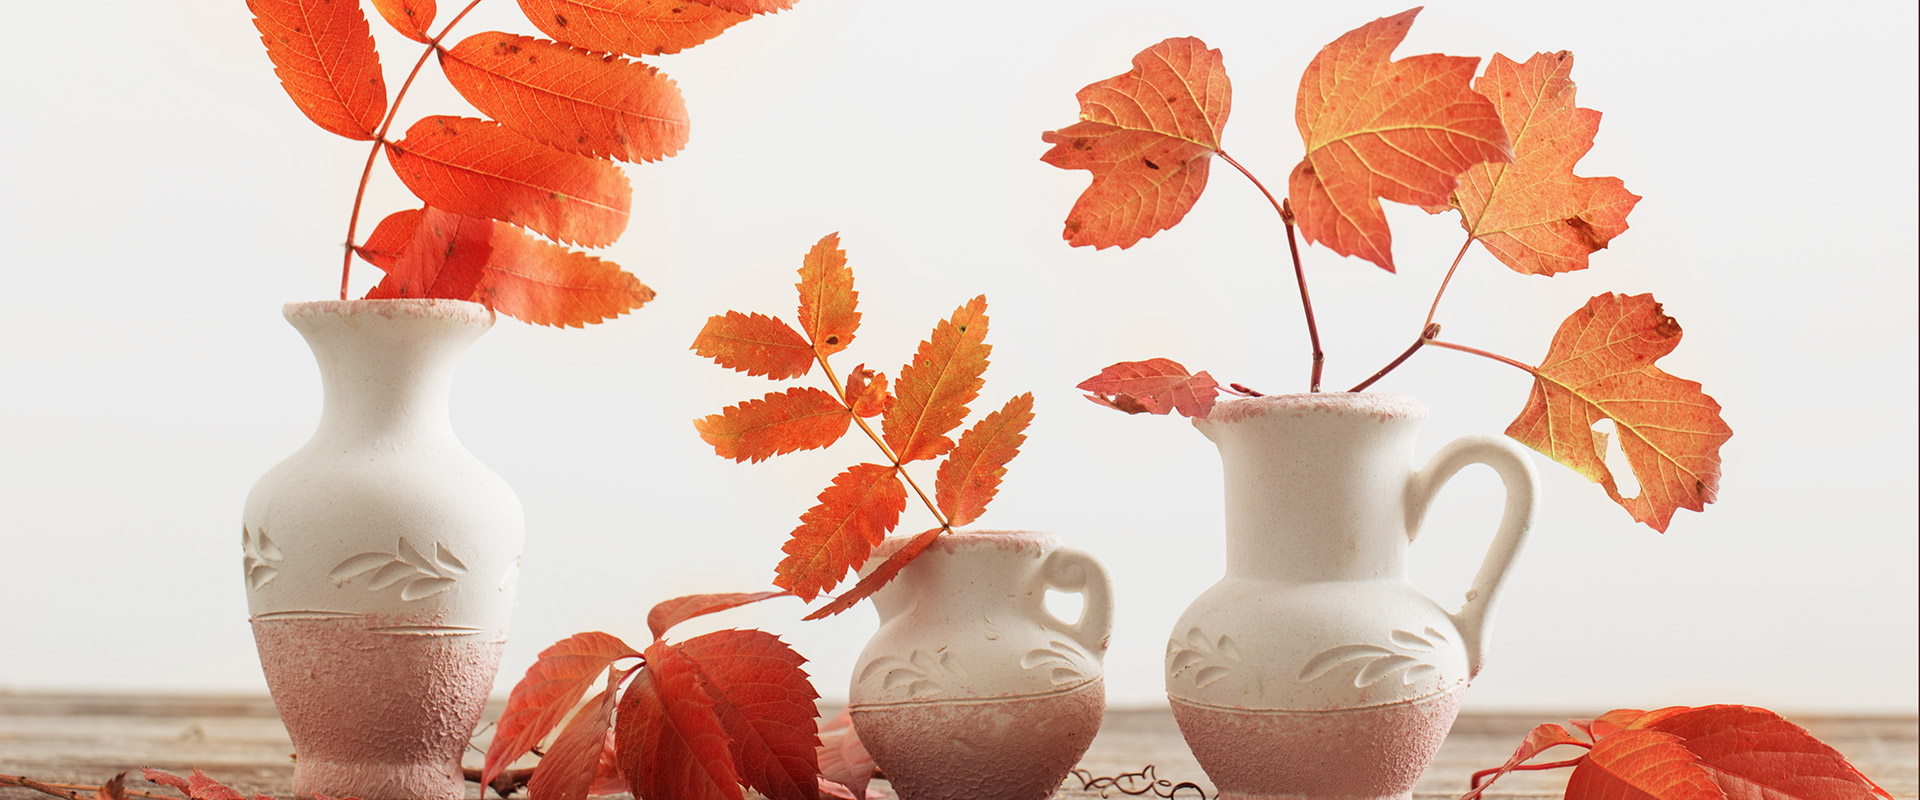 Dekorationen mit Herbstlaub – Fratelli Carli